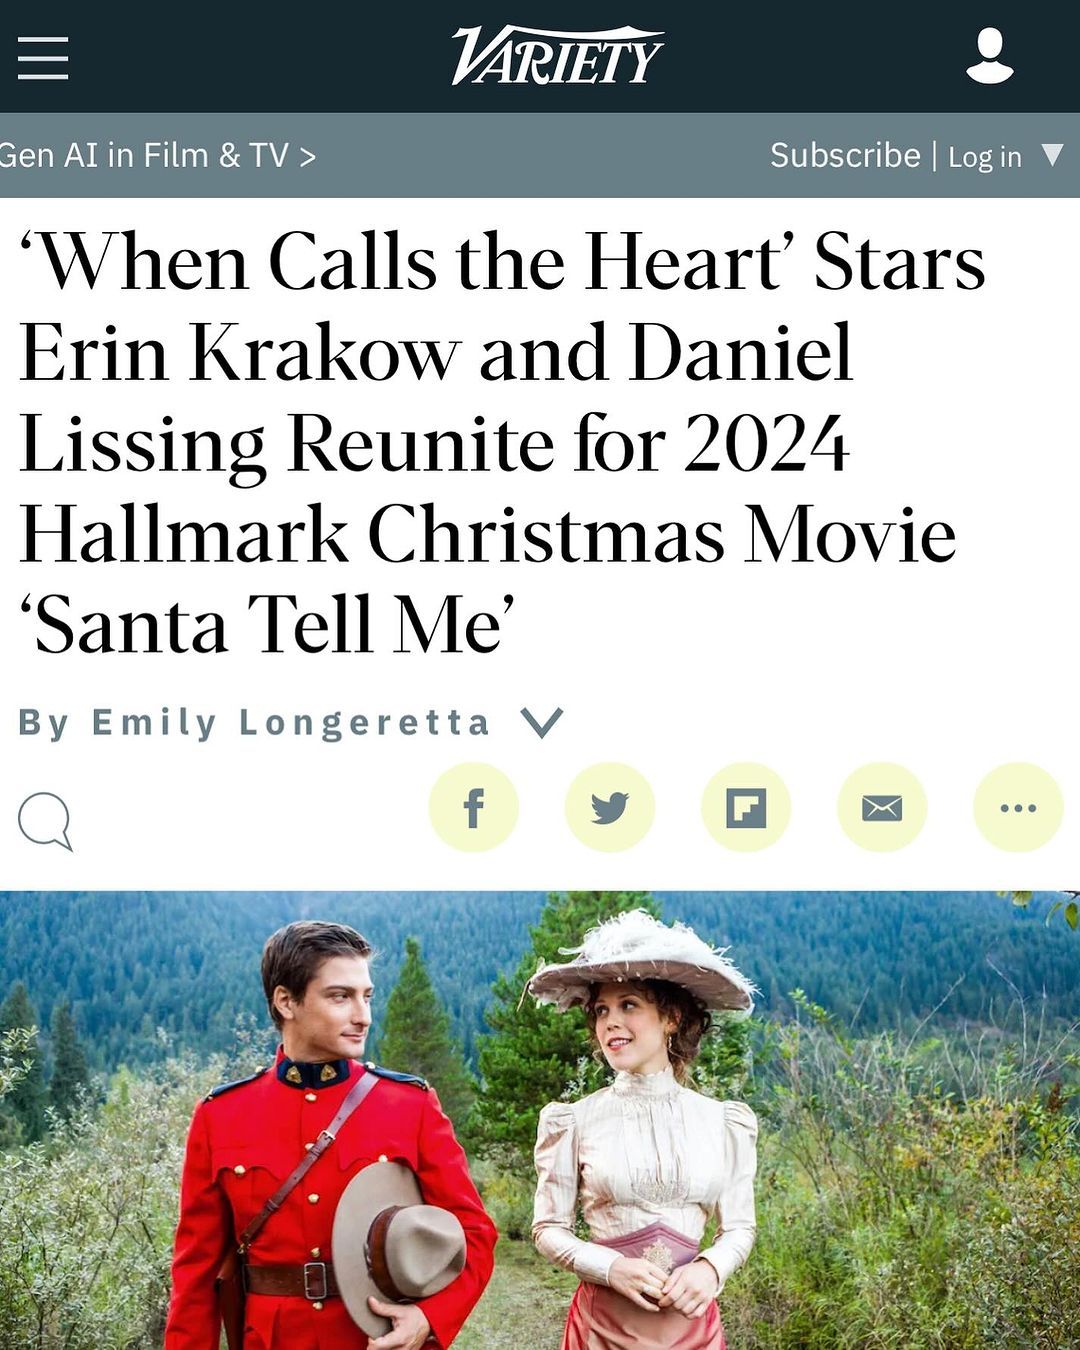 Daniel Lissing shared news of his and Erin Krakow's new Hallmark Christmas movie